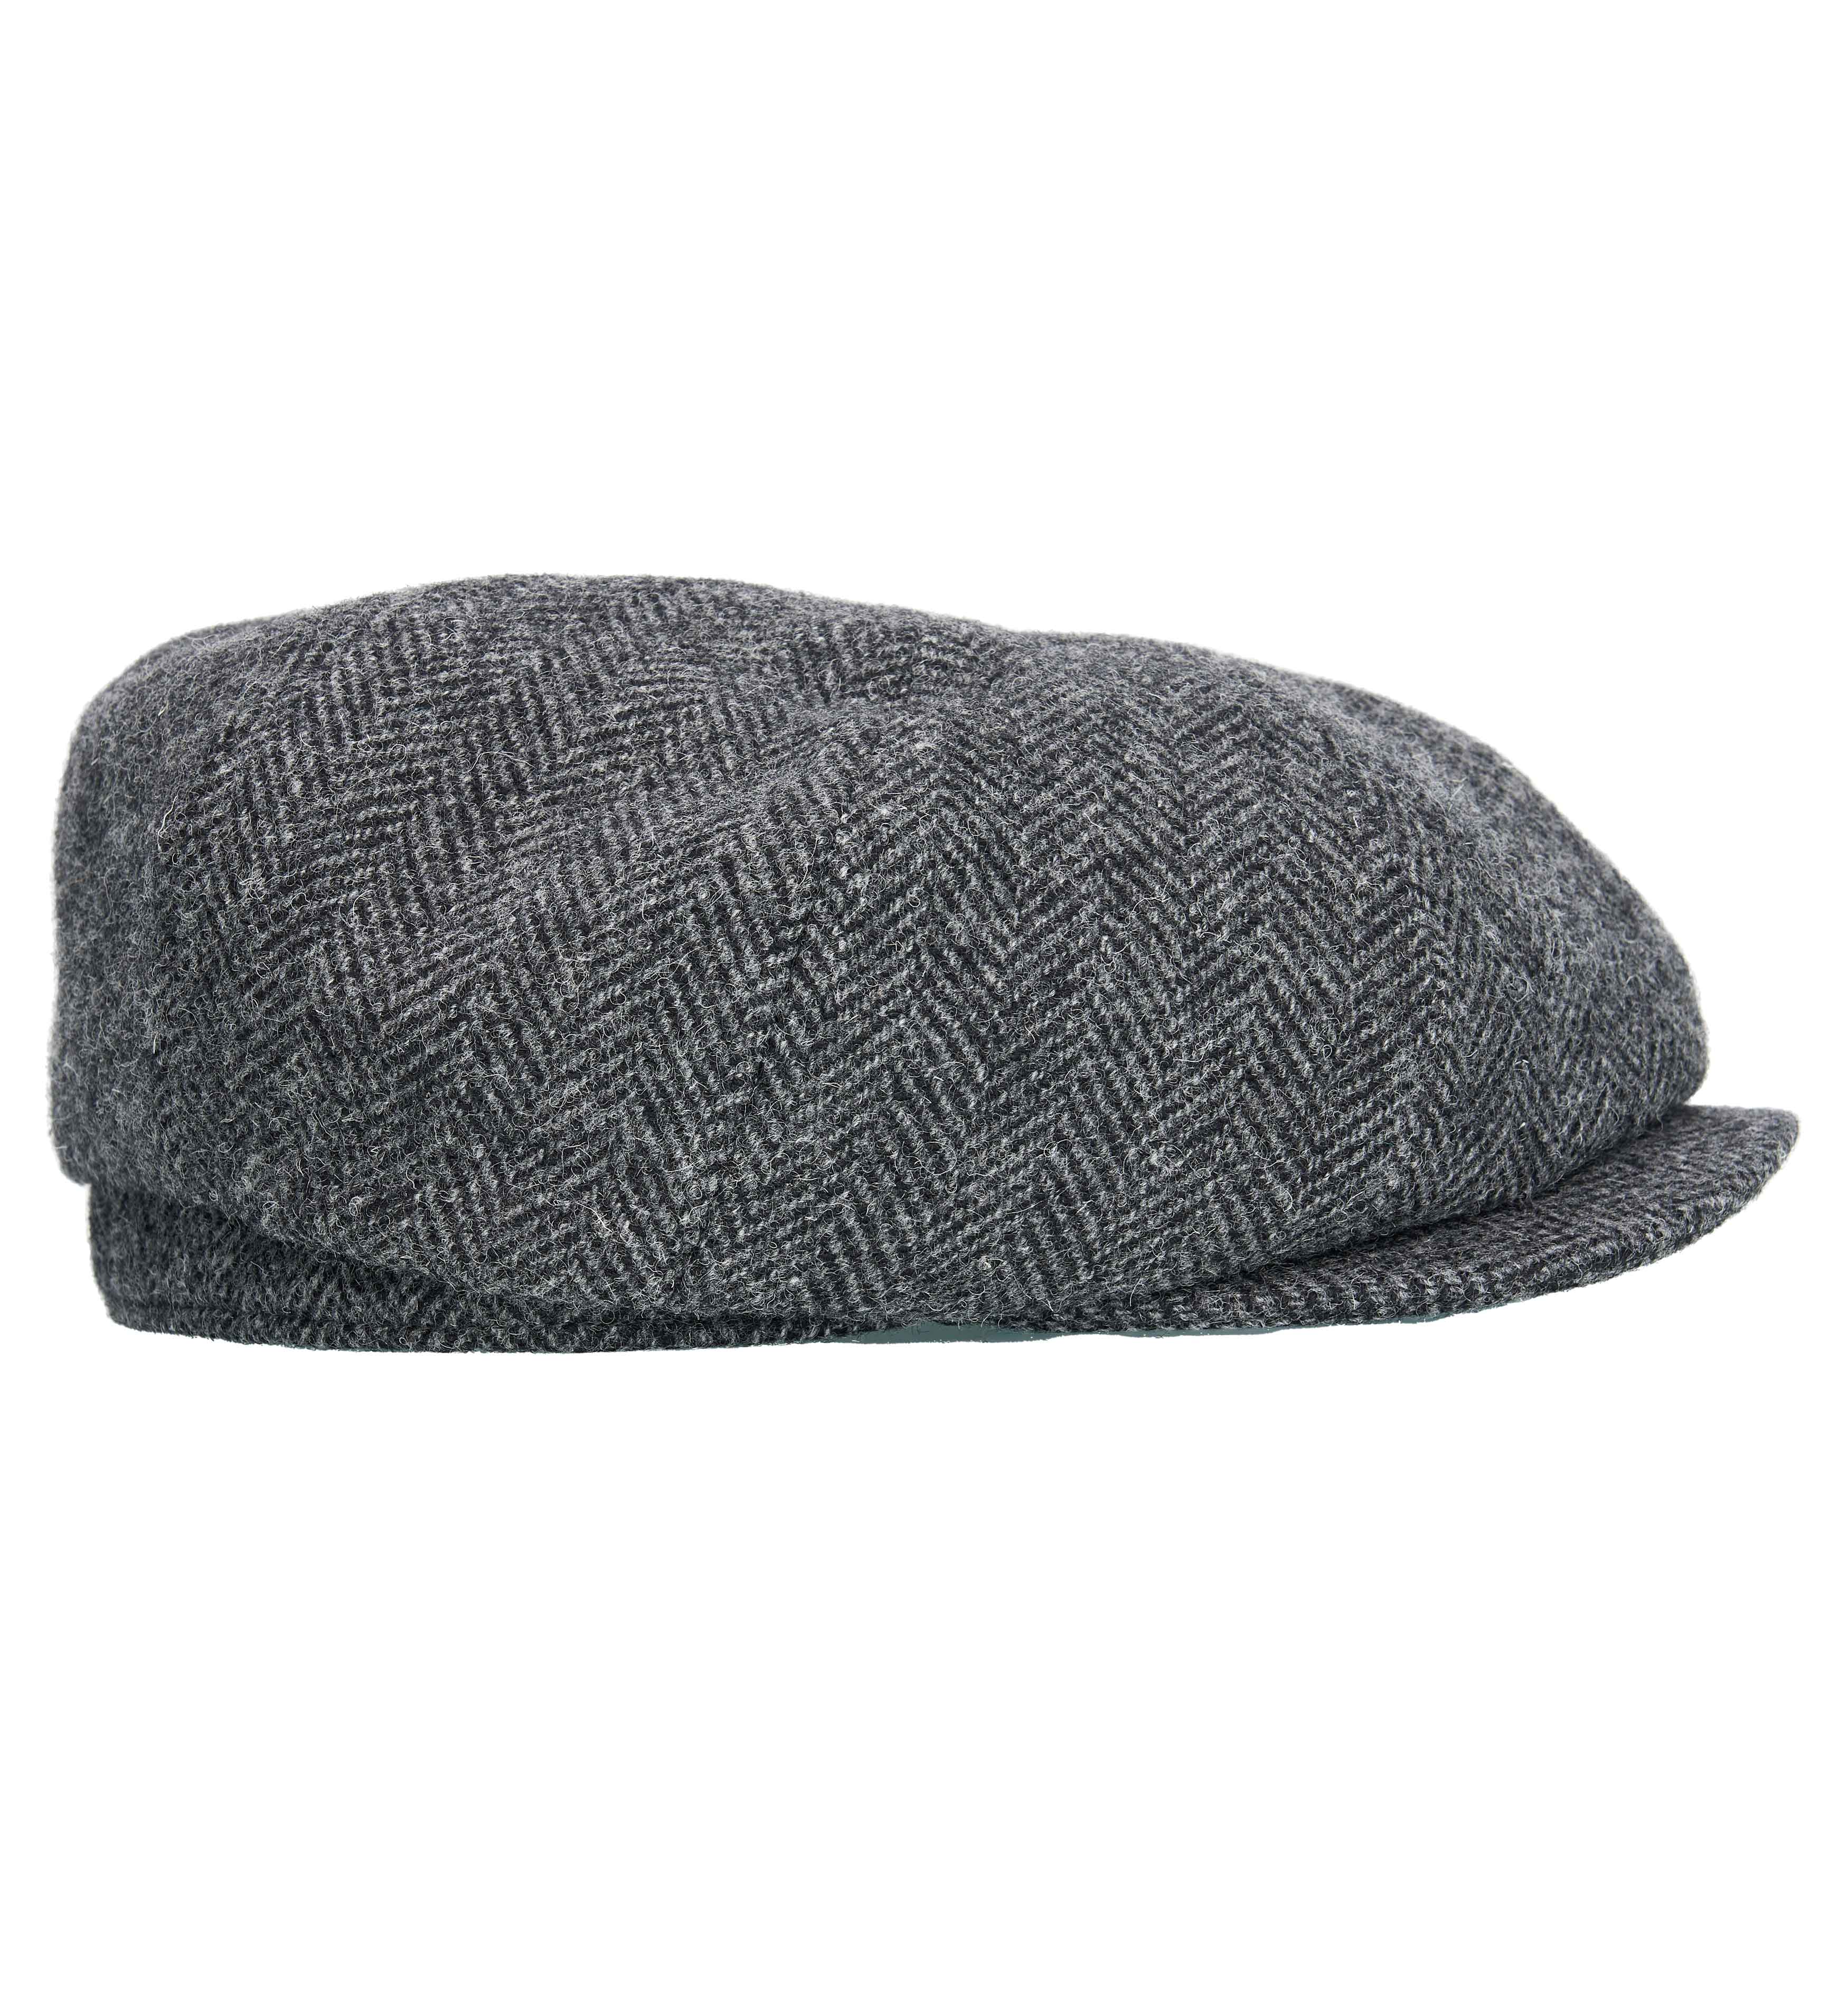 1928 Newsboy Cap Galway grey